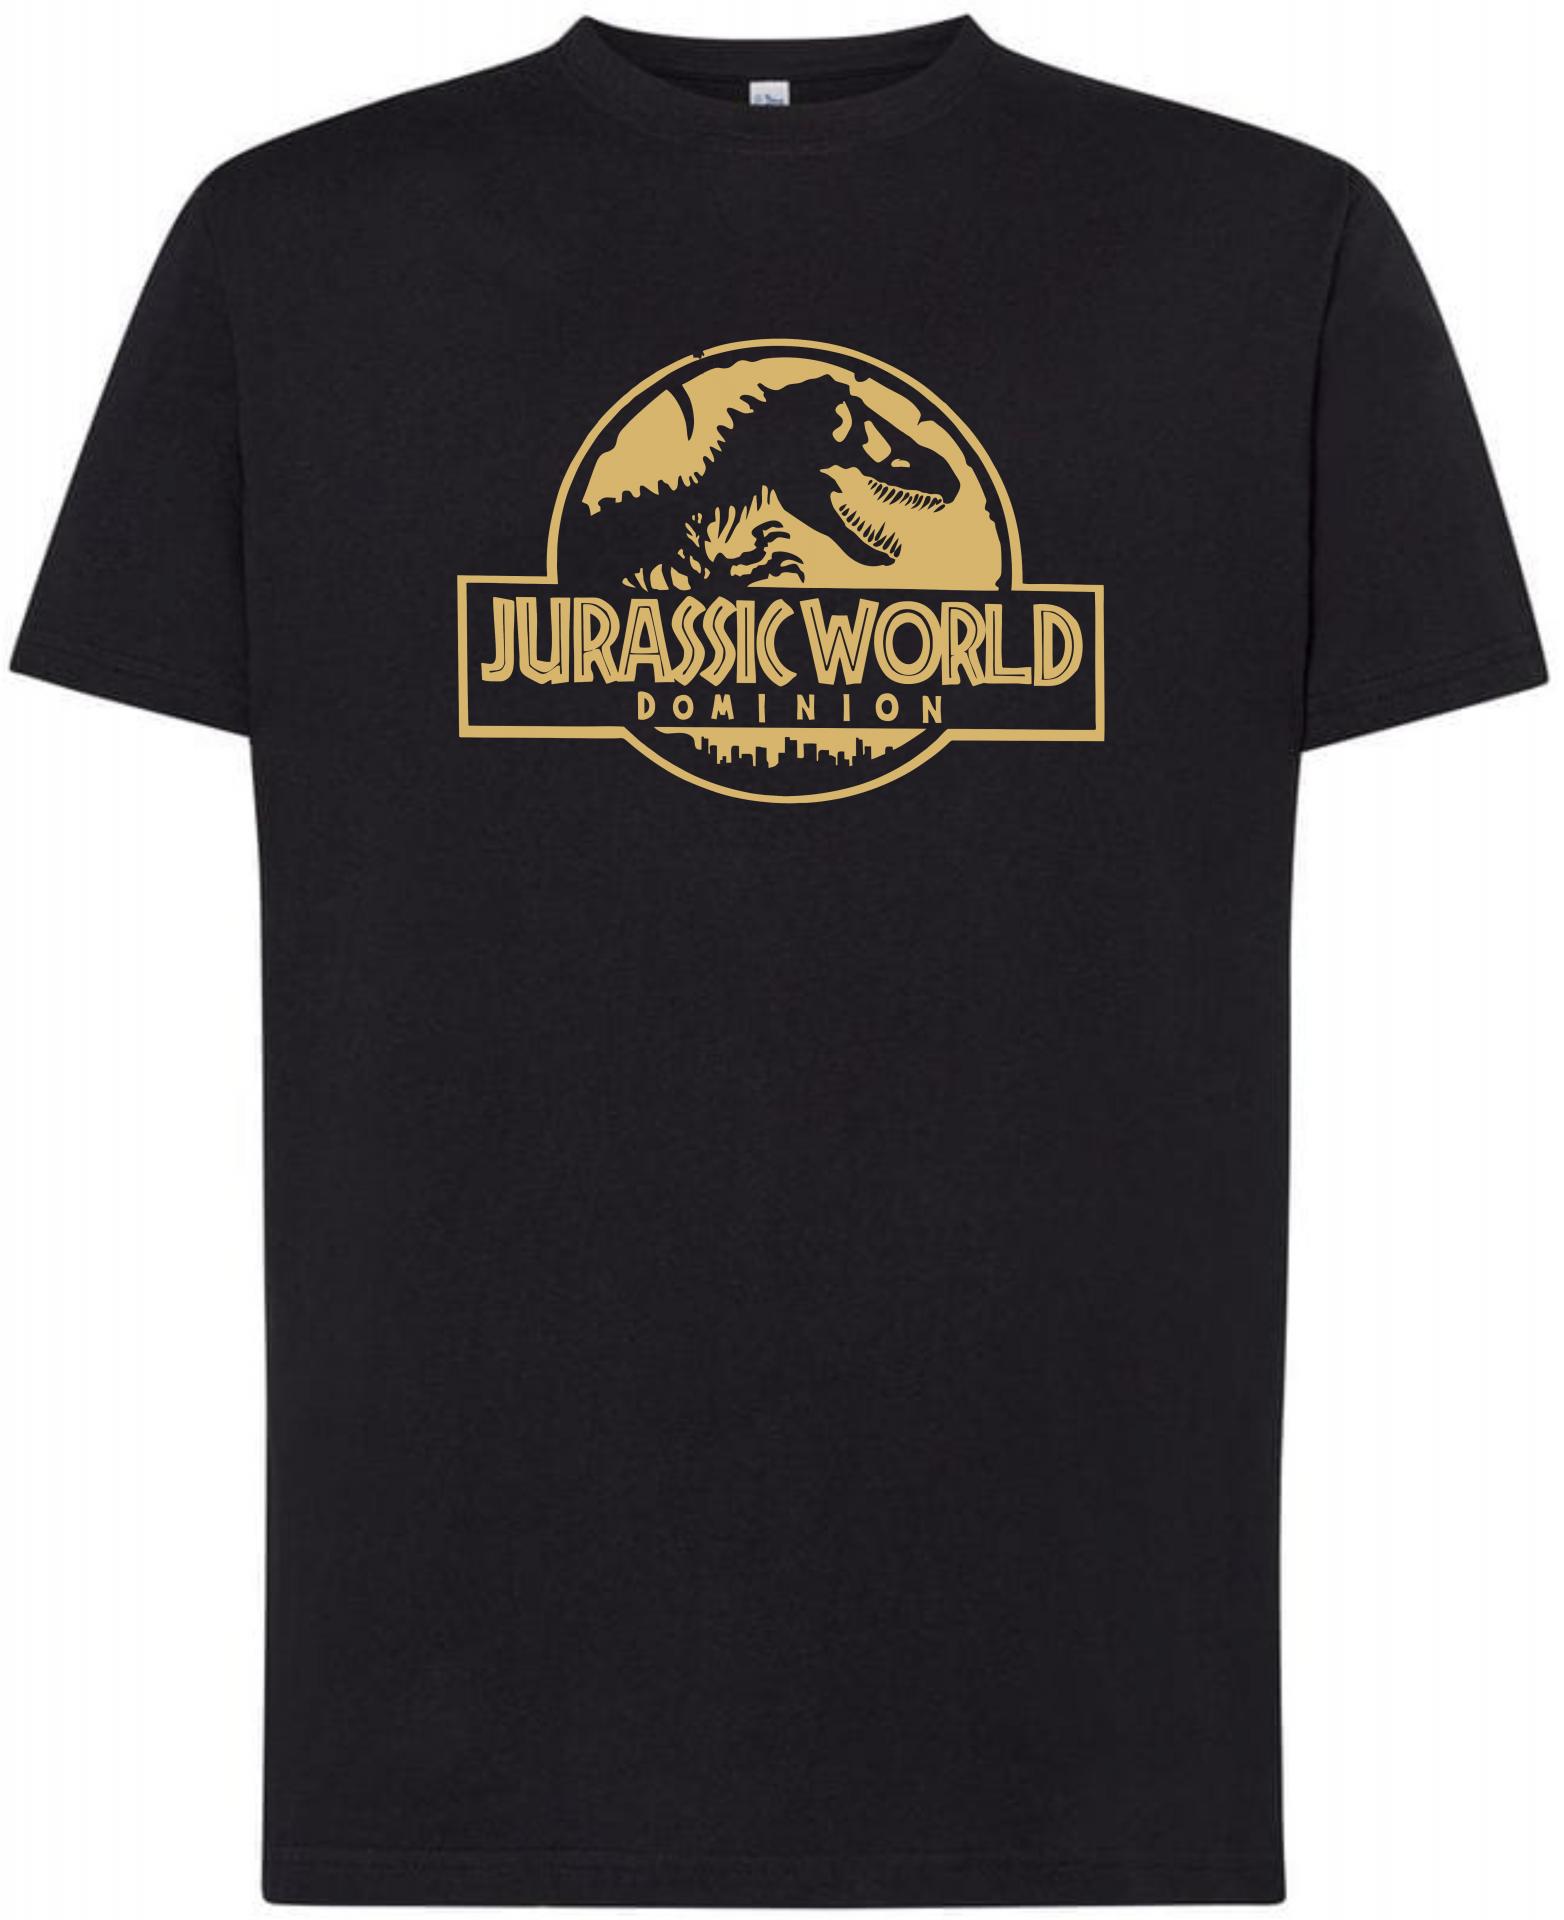 Camiseta JURASSIC WORLD DOMINION